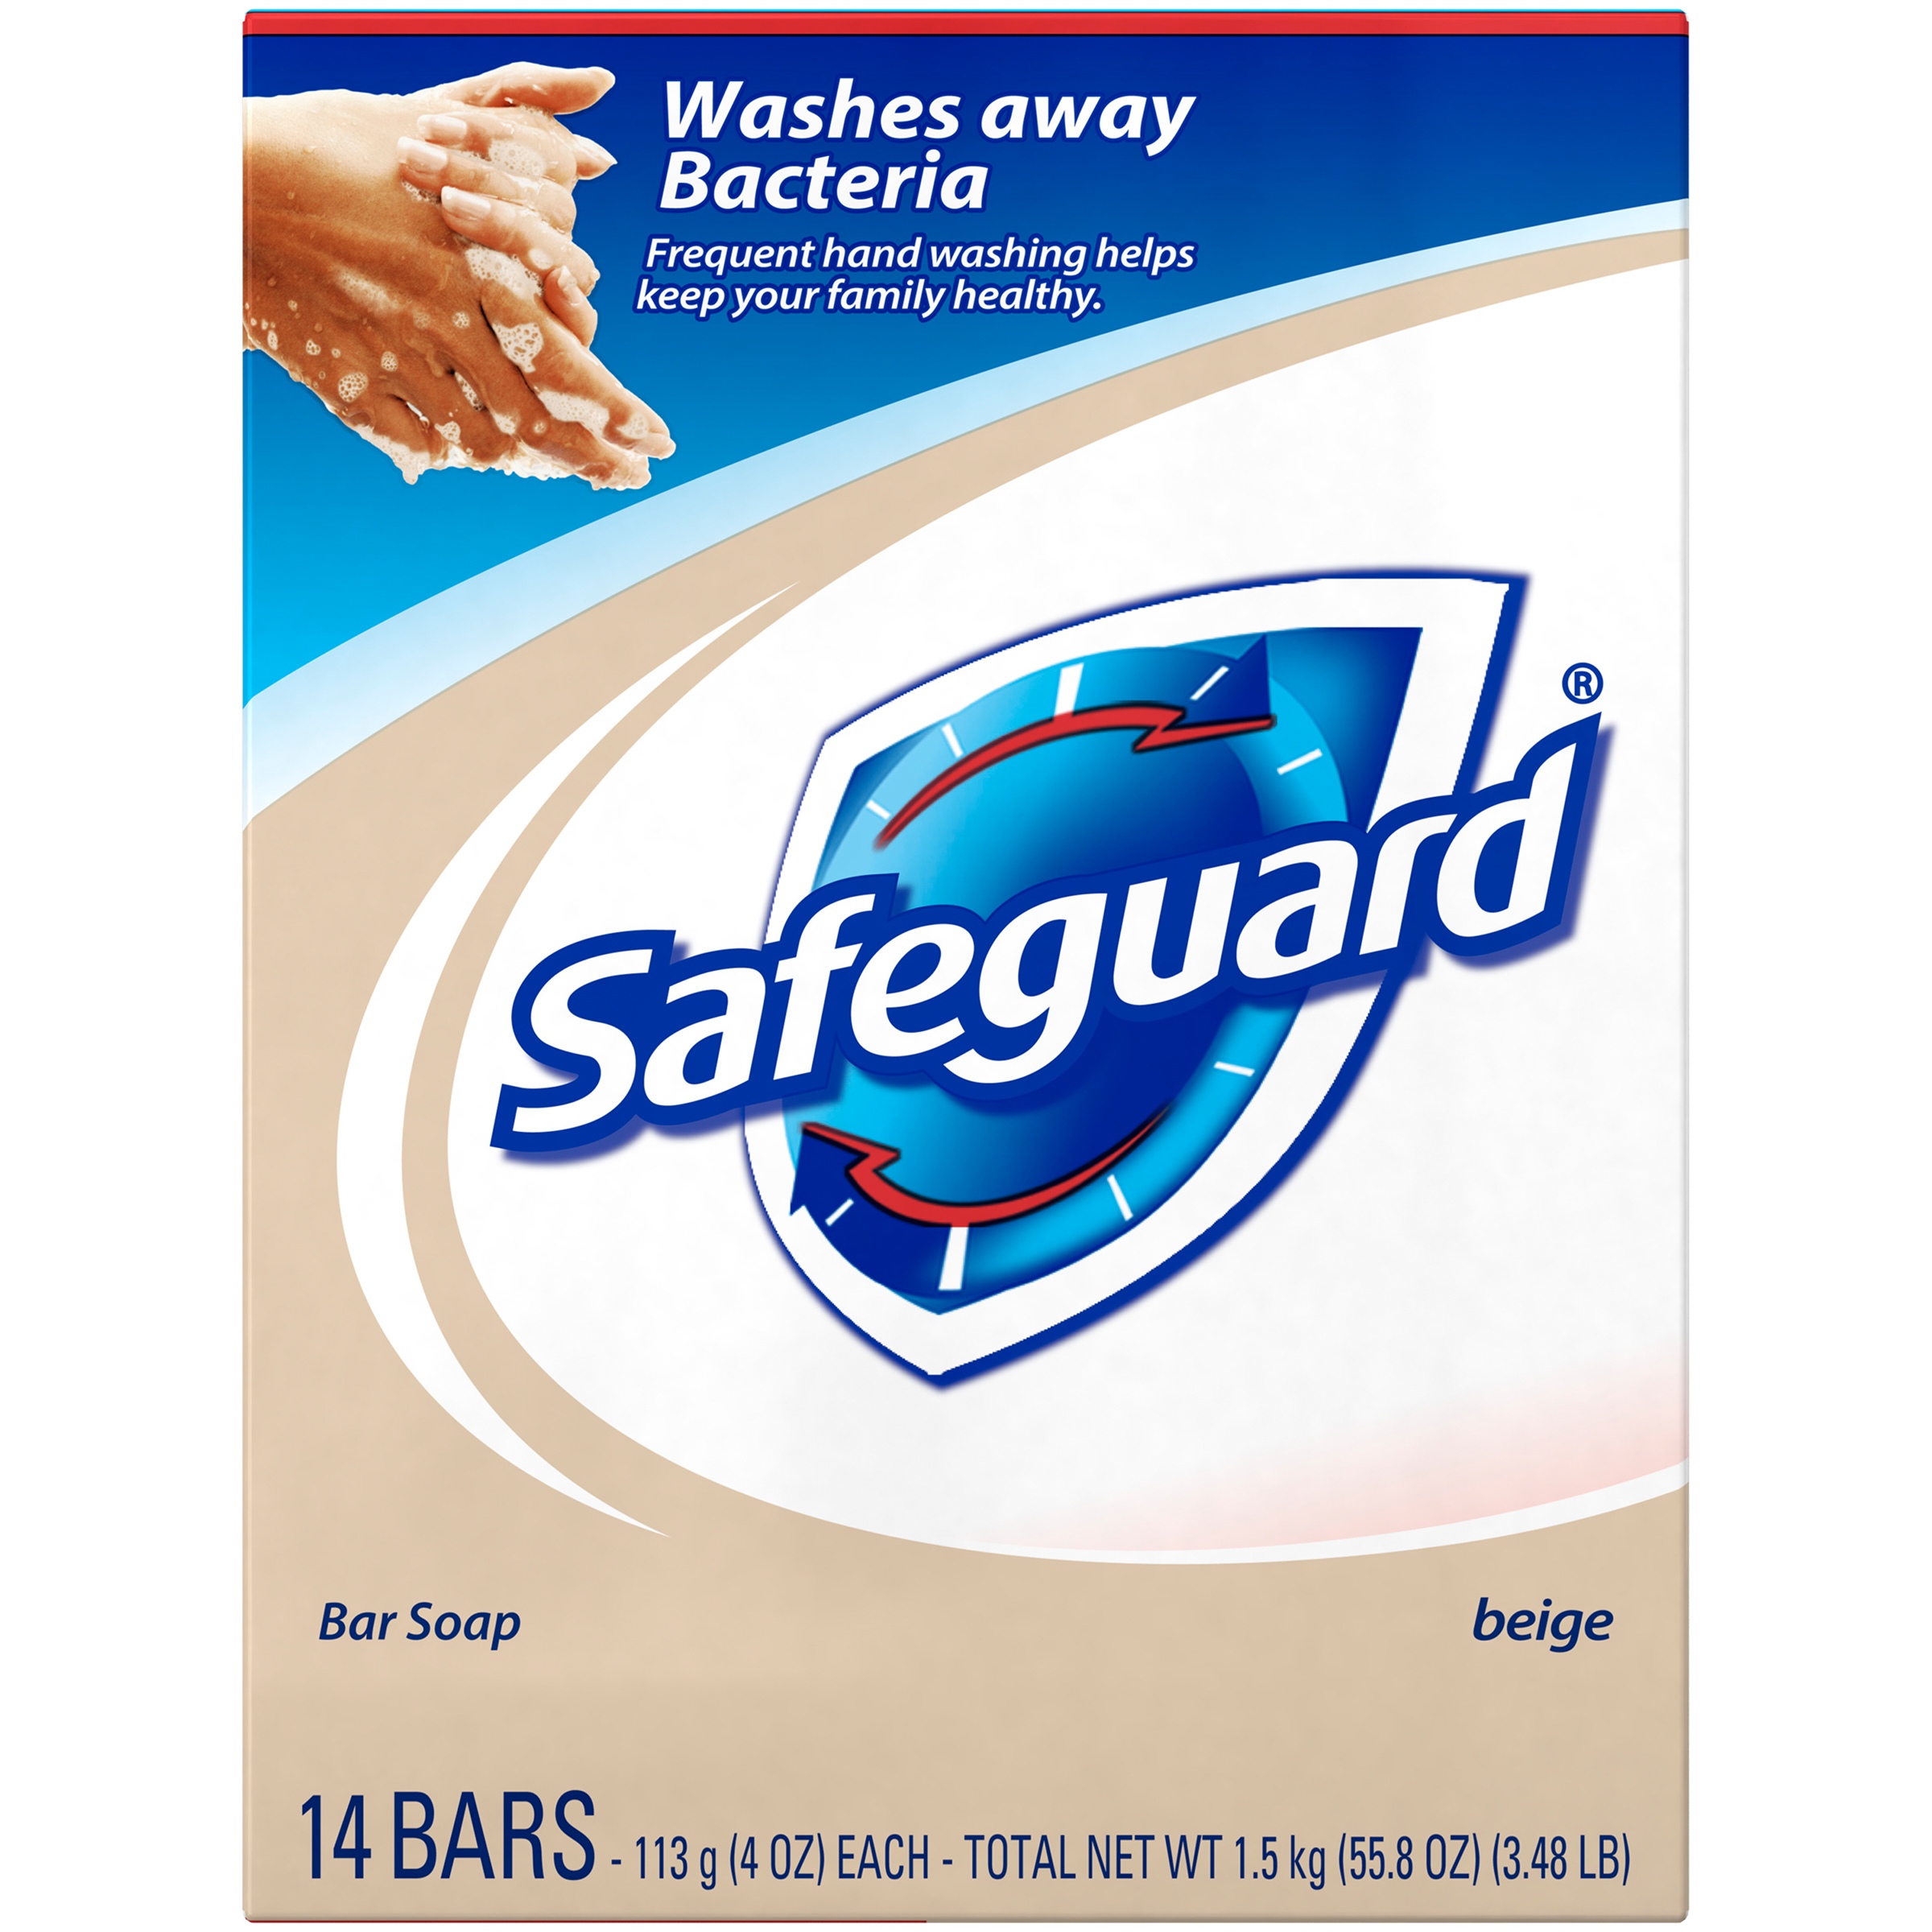 Safeguard Original Bar Soap, Beige, 4 Ounces, 14 Pack - image 5 of 6